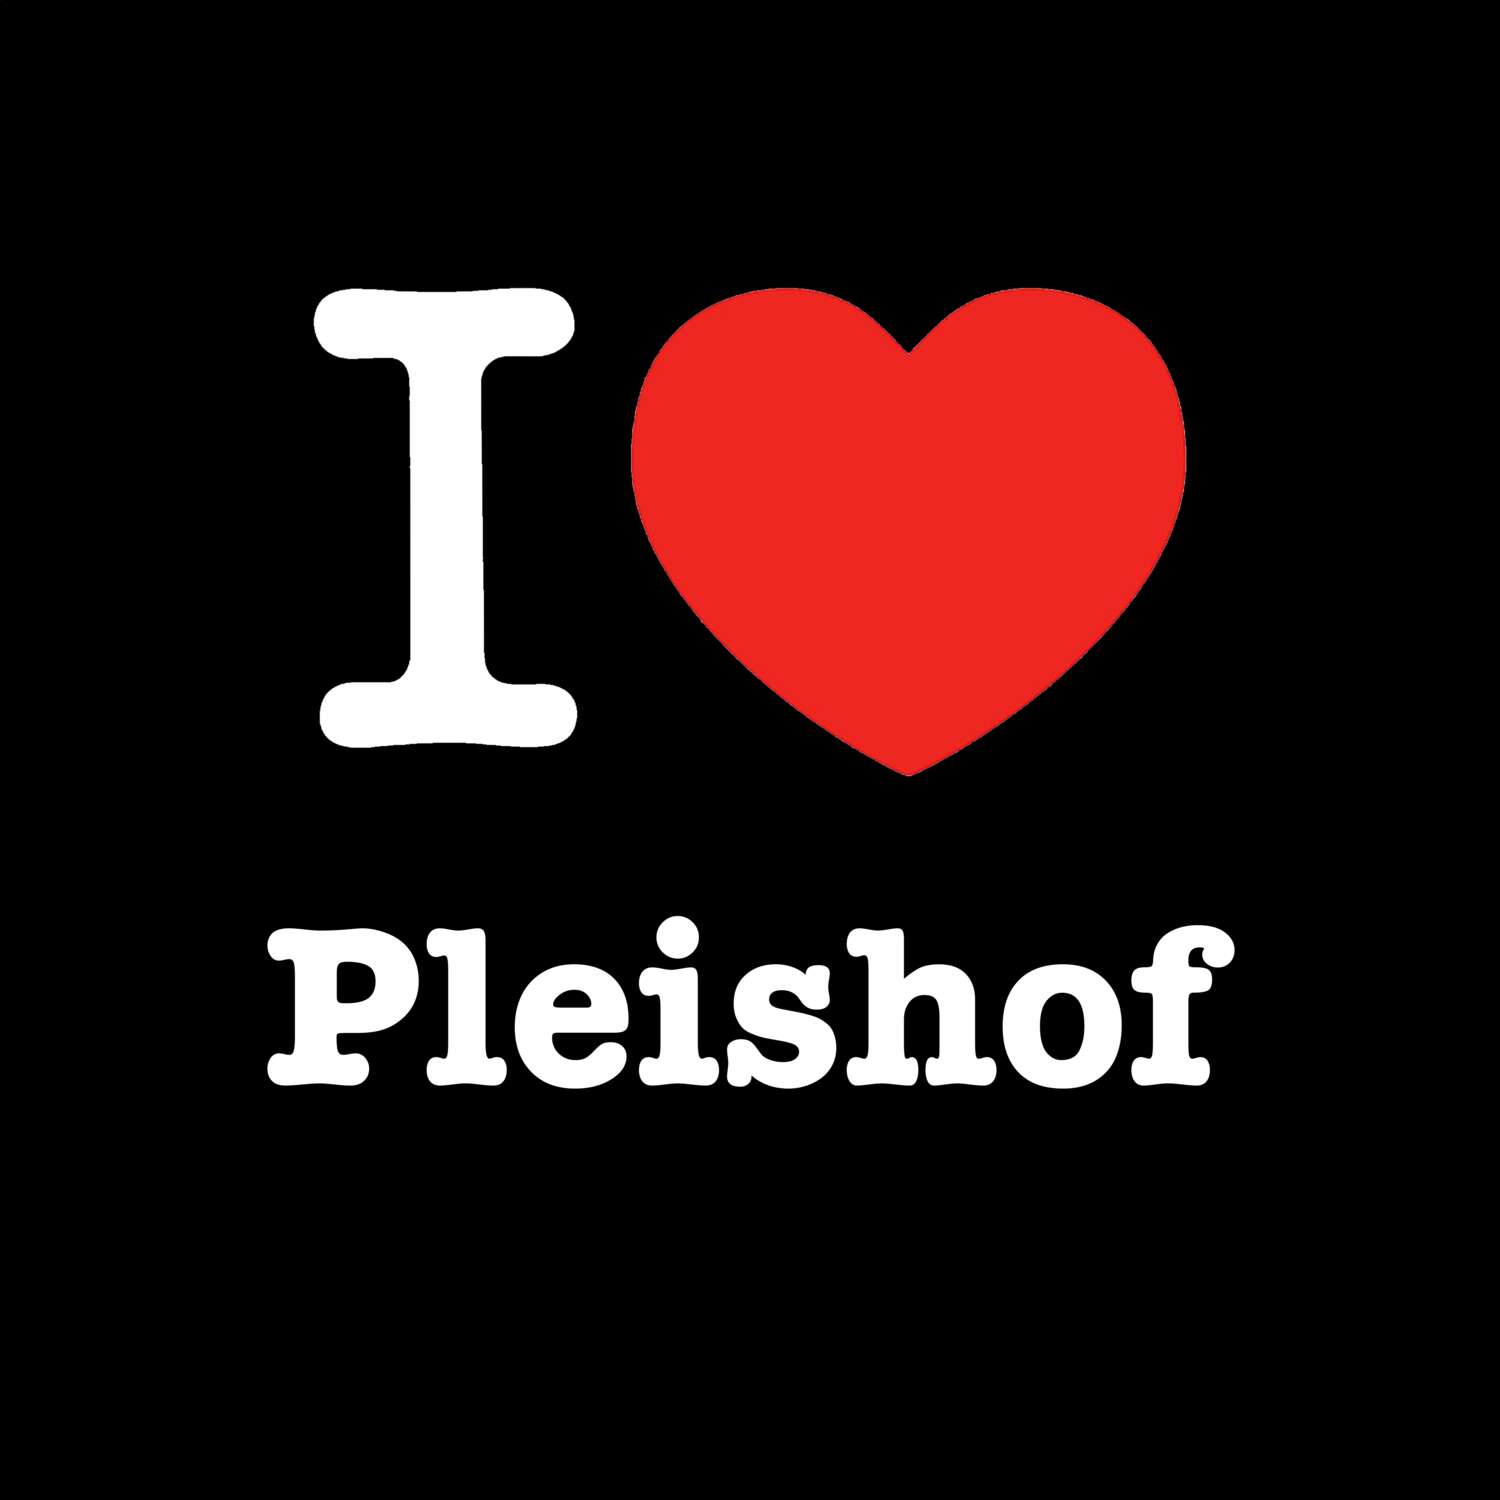 Pleishof T-Shirt »I love«